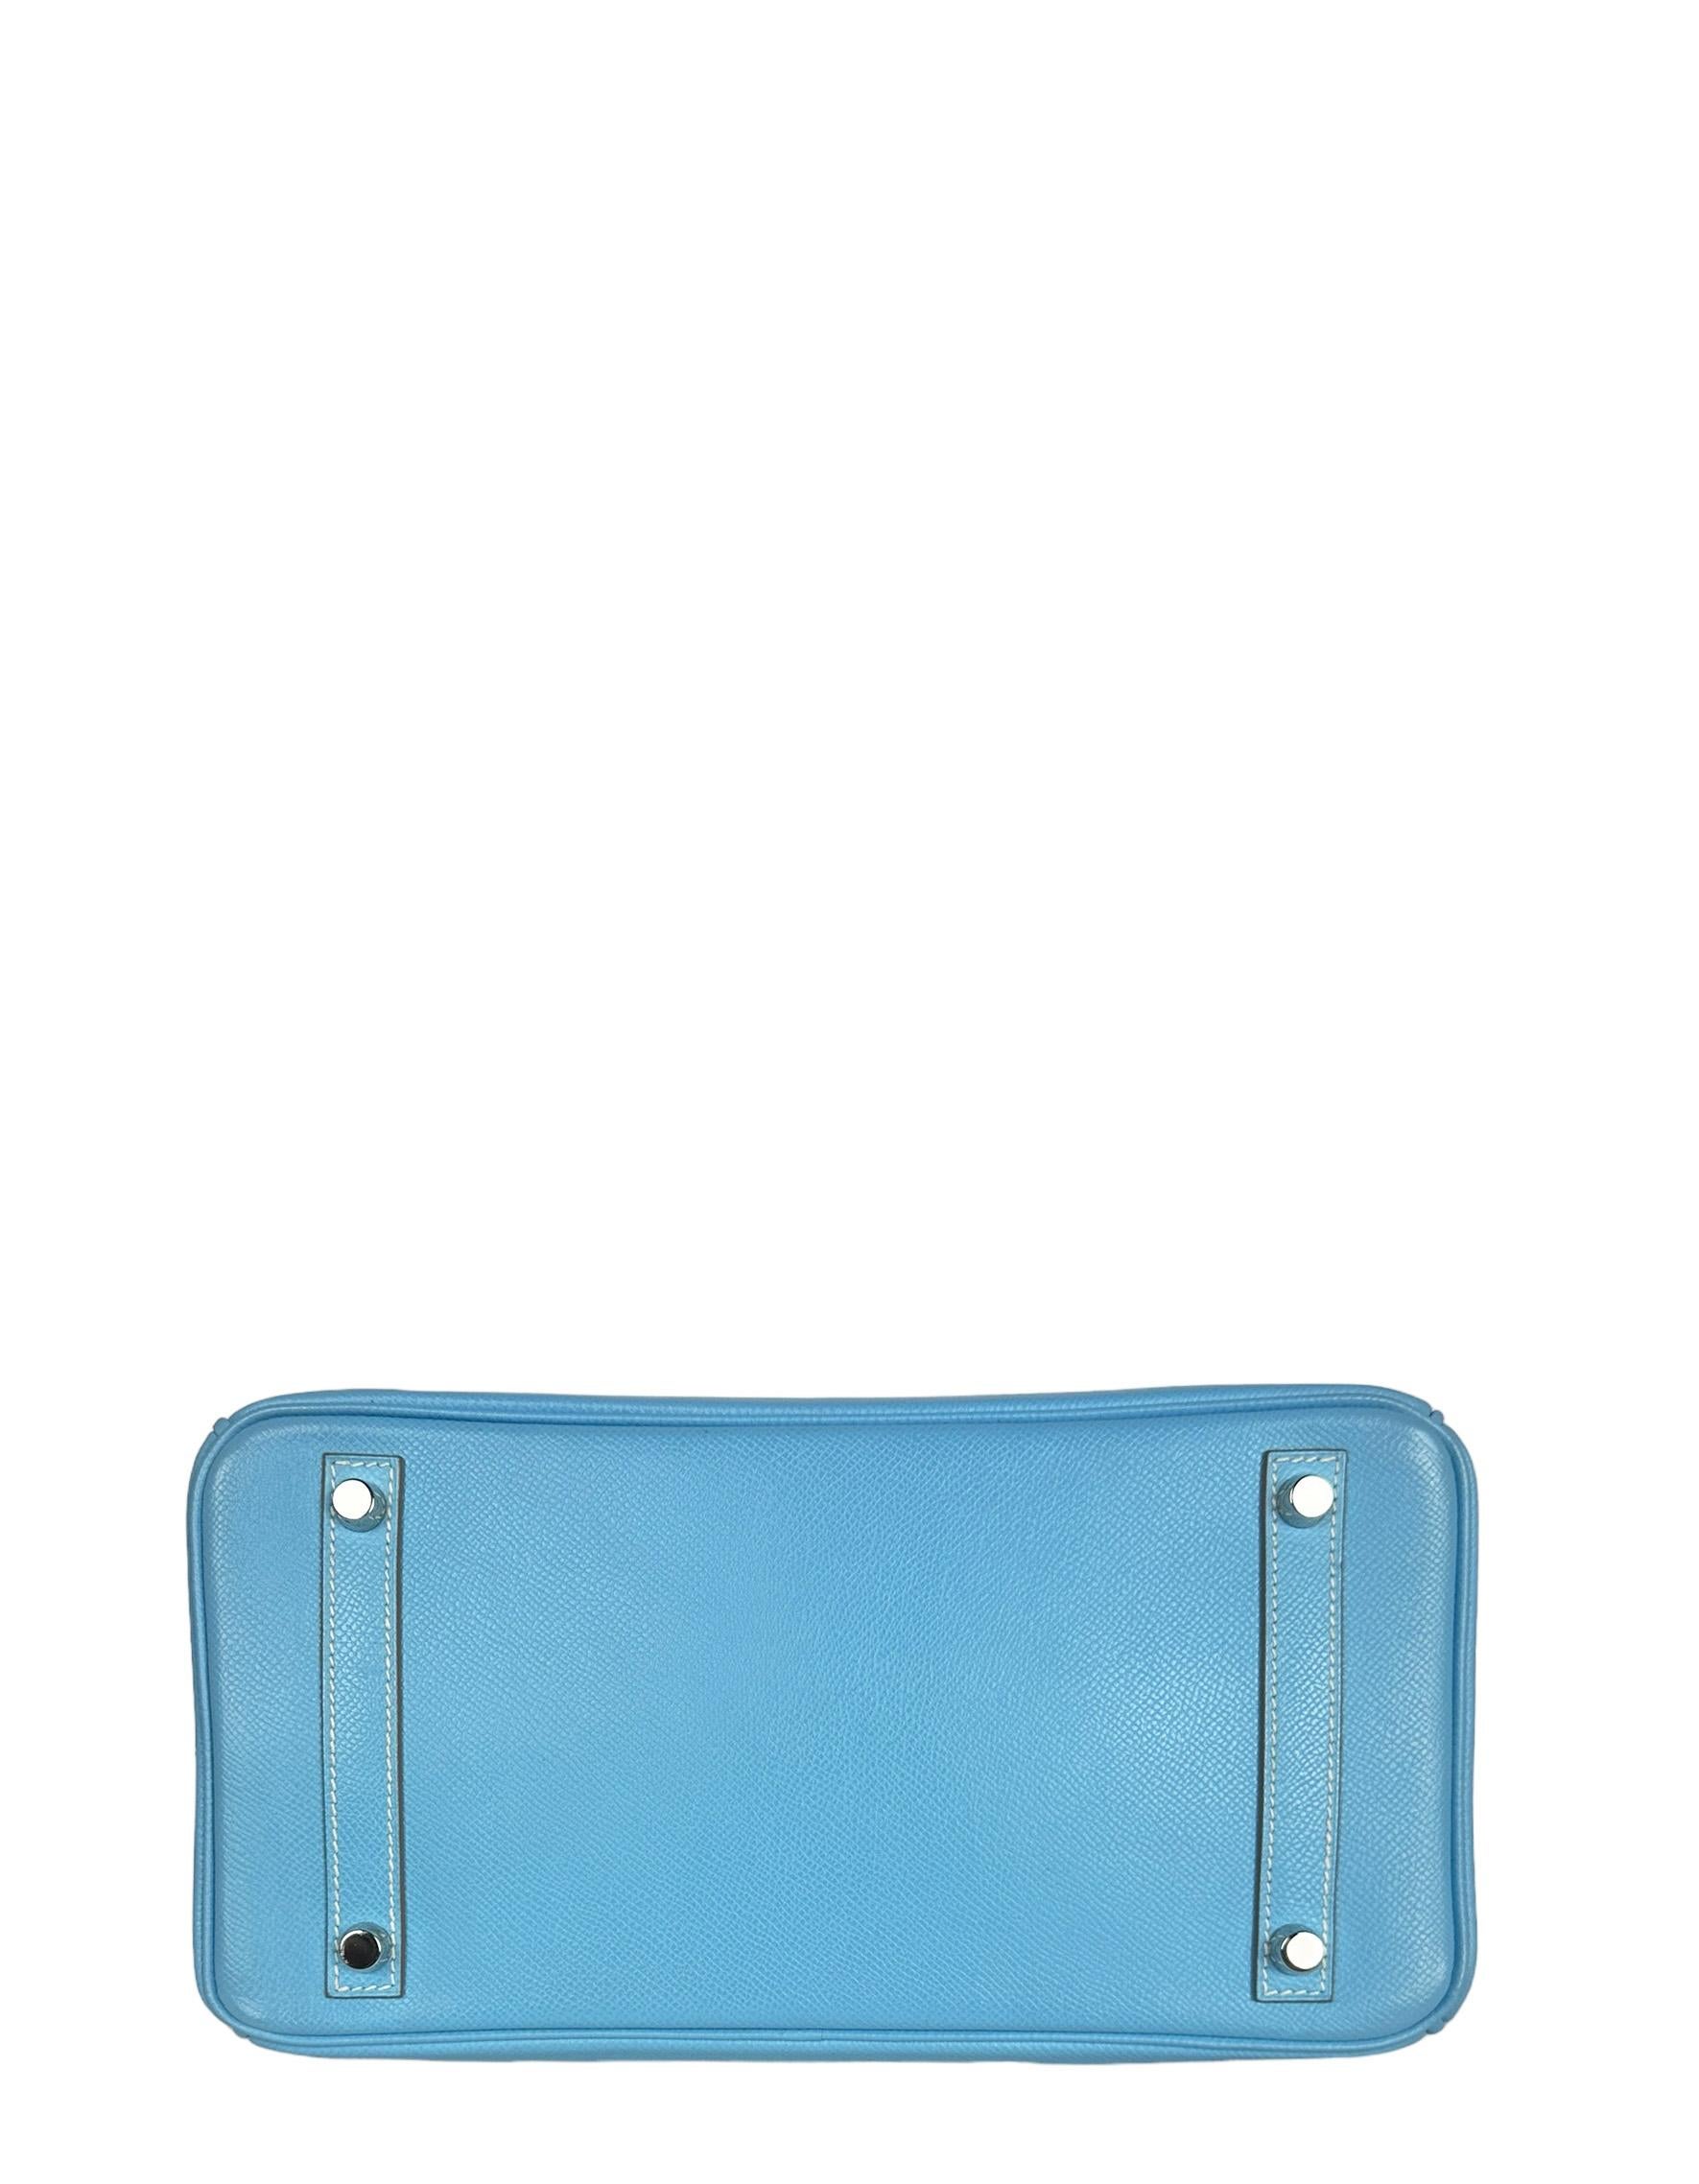 Hermes Blue Celeste/ Mykonos Epsom Leather 30cm Candy Birkin Bag PHW For Sale 3